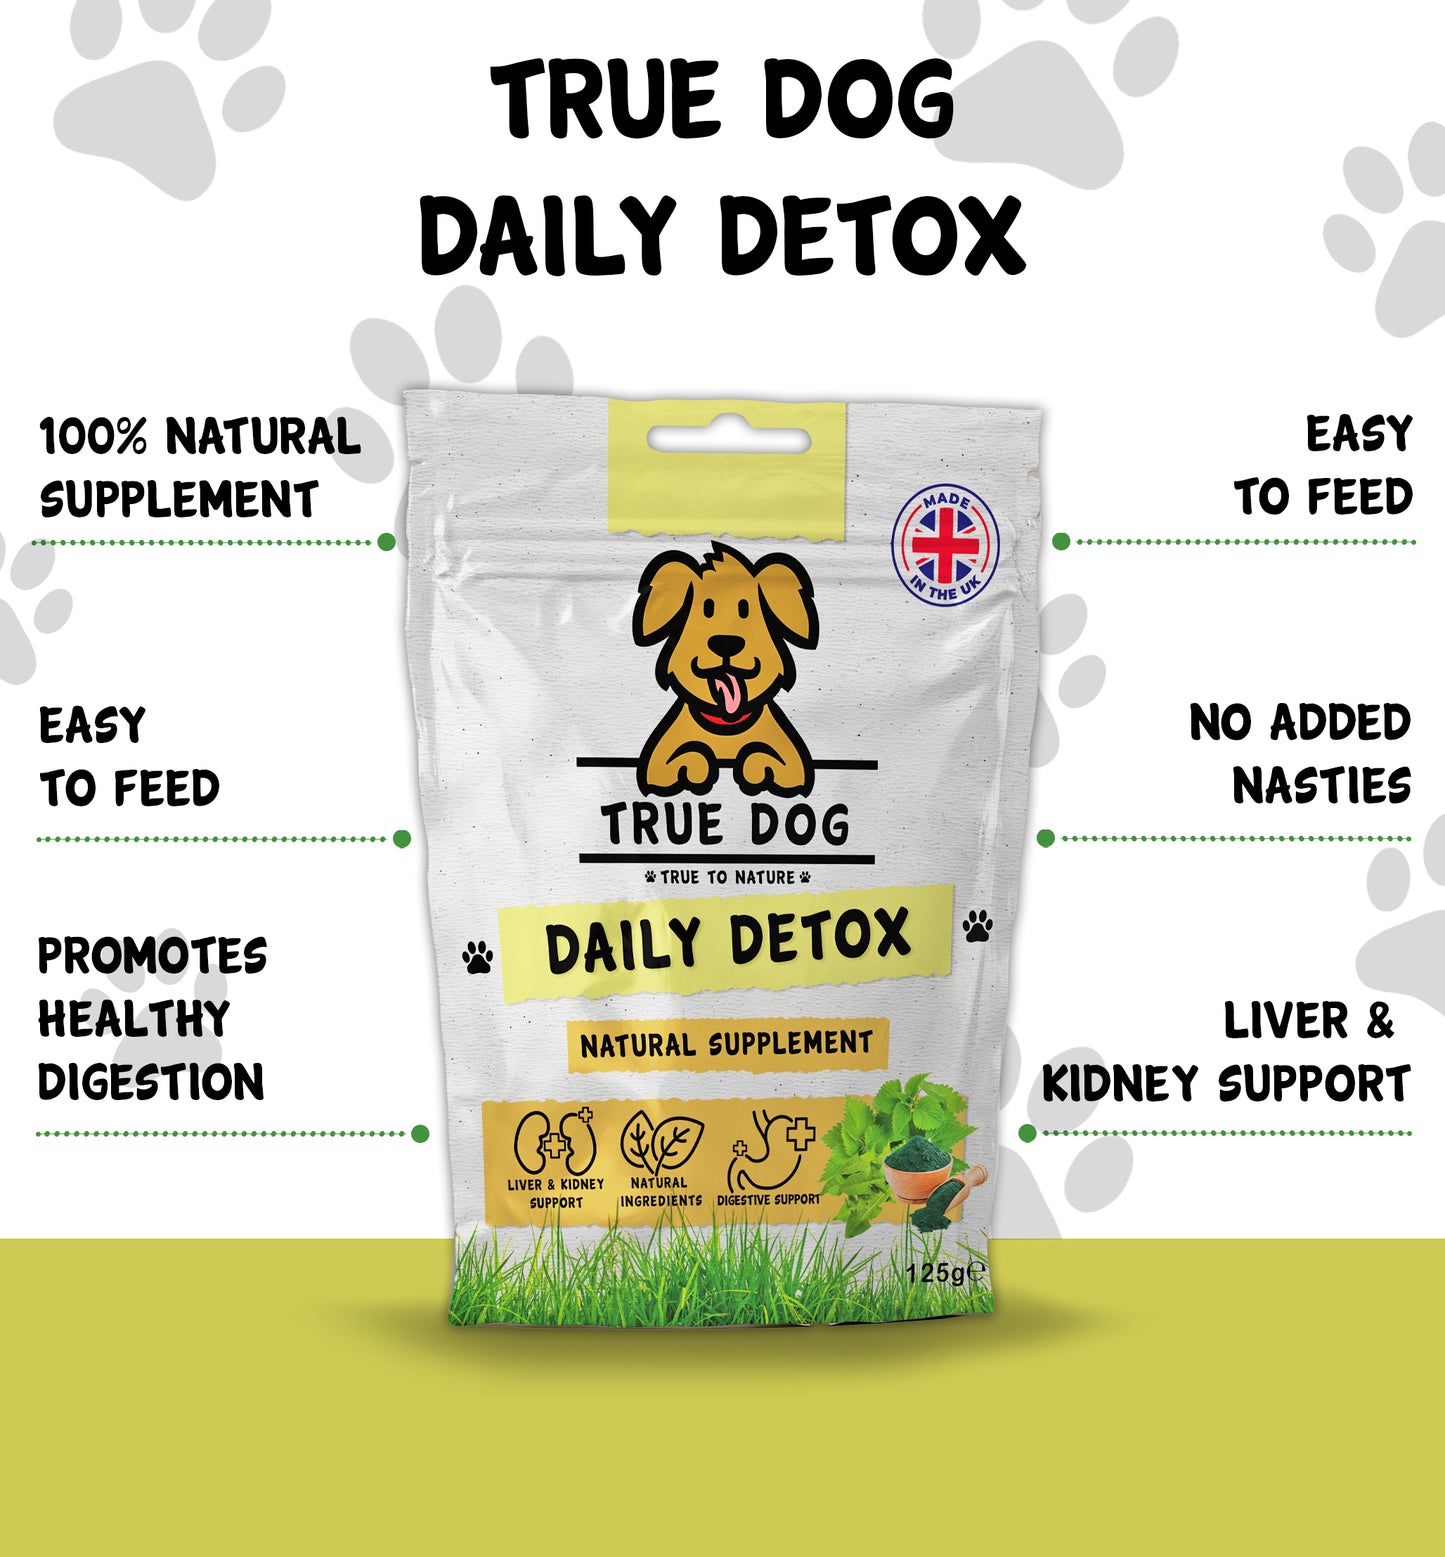 Natural Supplement - Daily Detox